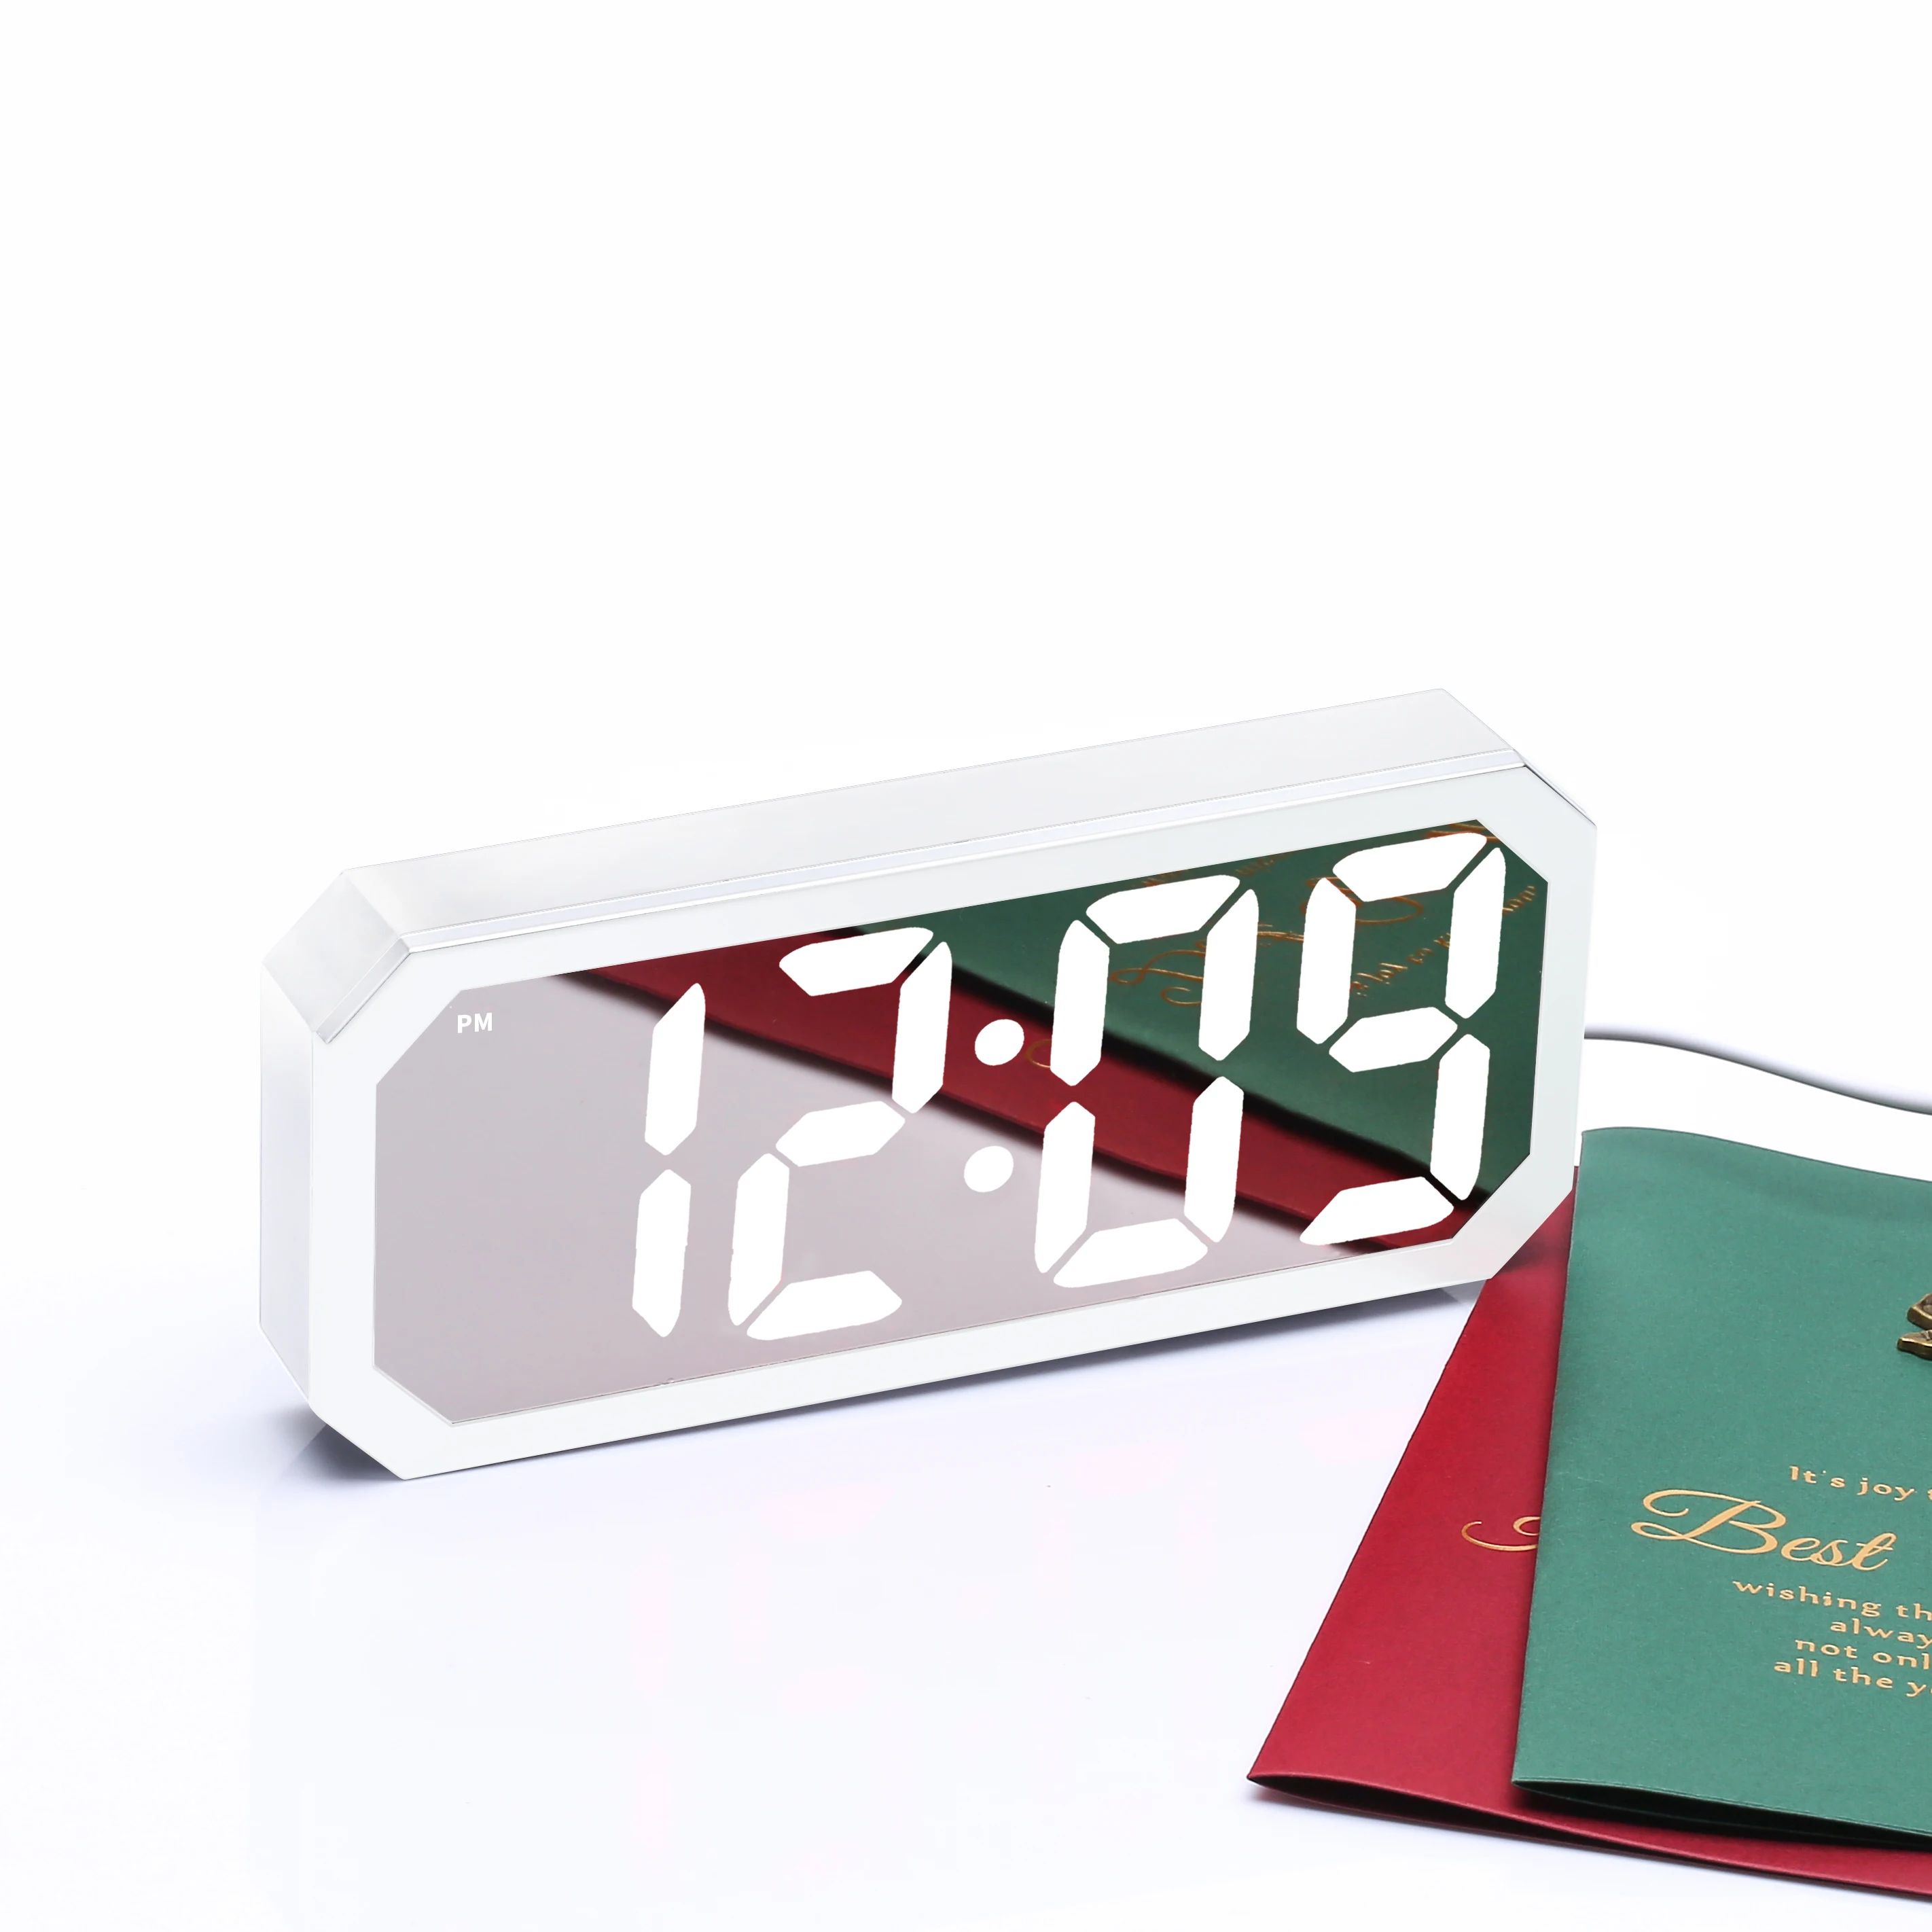 

LED Luminous Small Electronic Alarm Clock Light Creative Mute Alarm Clocks Black Simple Sveglia Digitale Home Decor Clock AB50AC